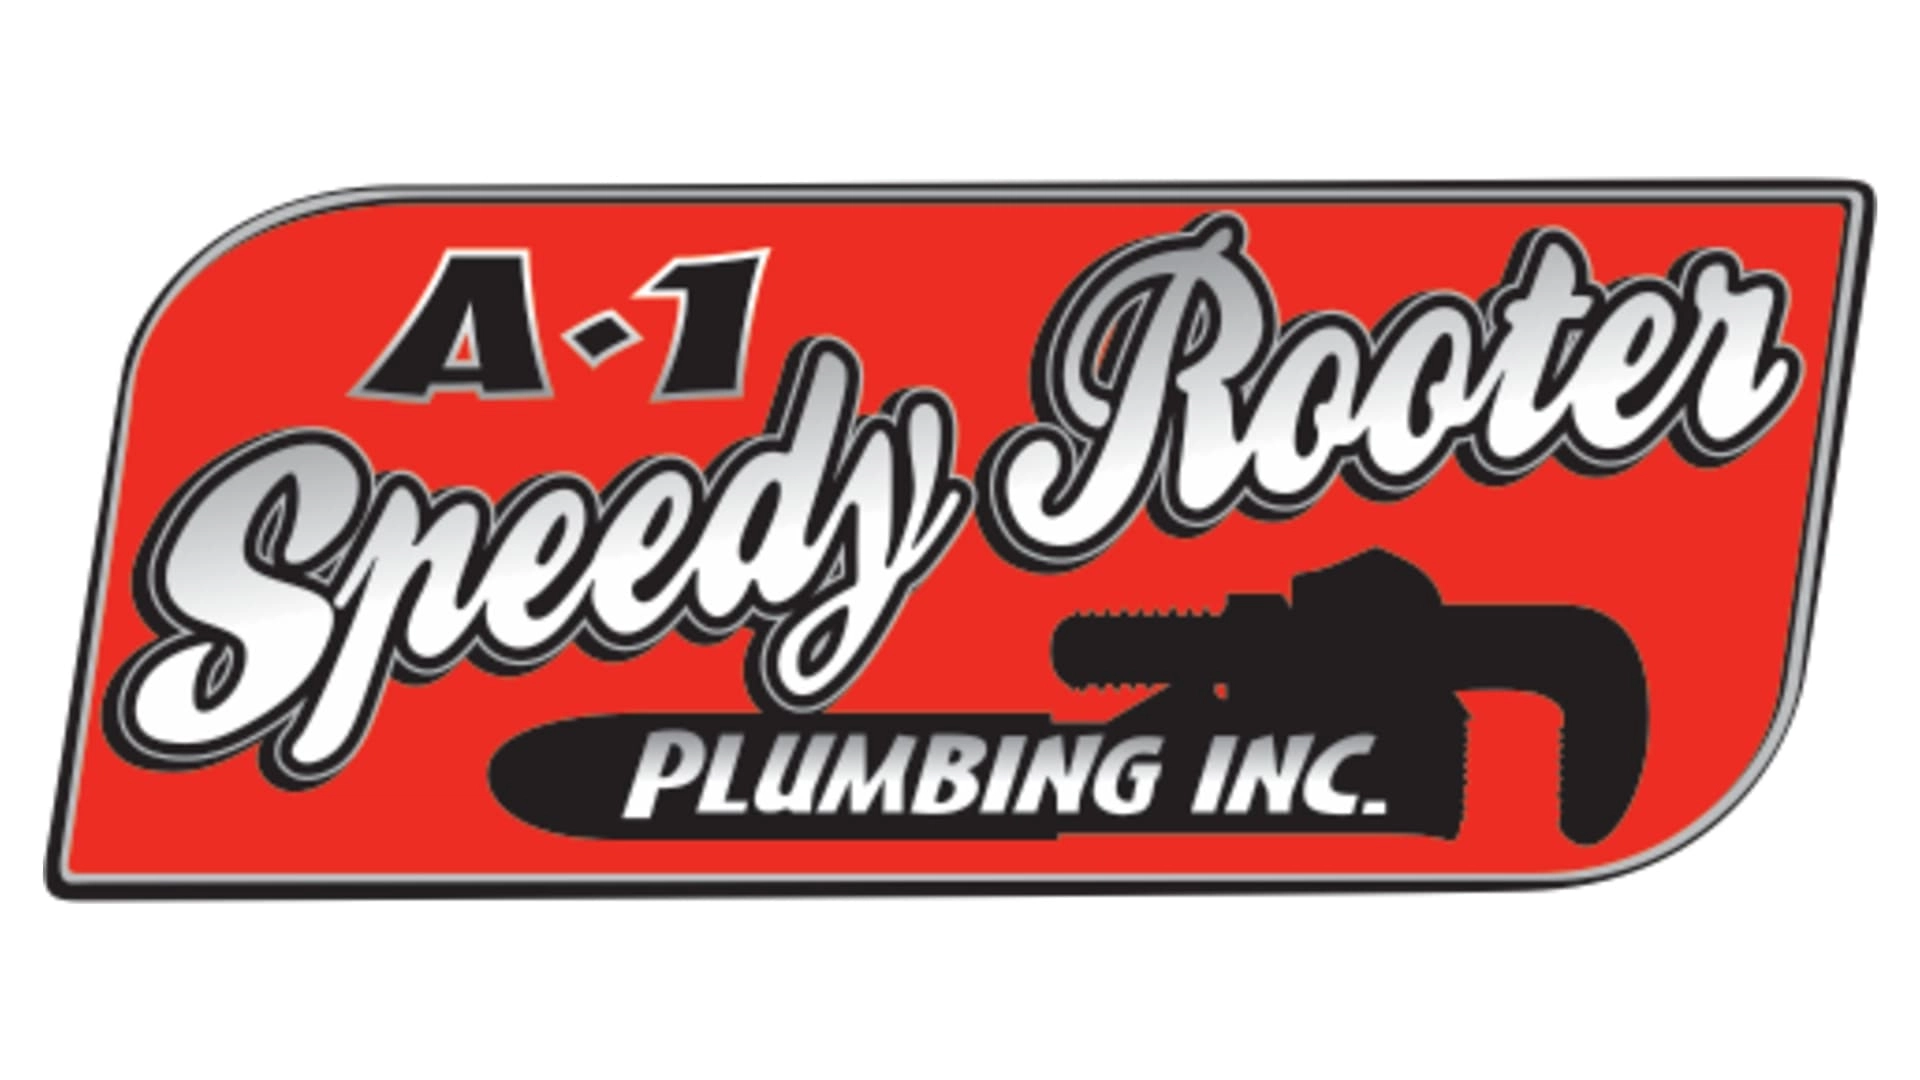 A1 Speedy Rooter & Plumbing Logo